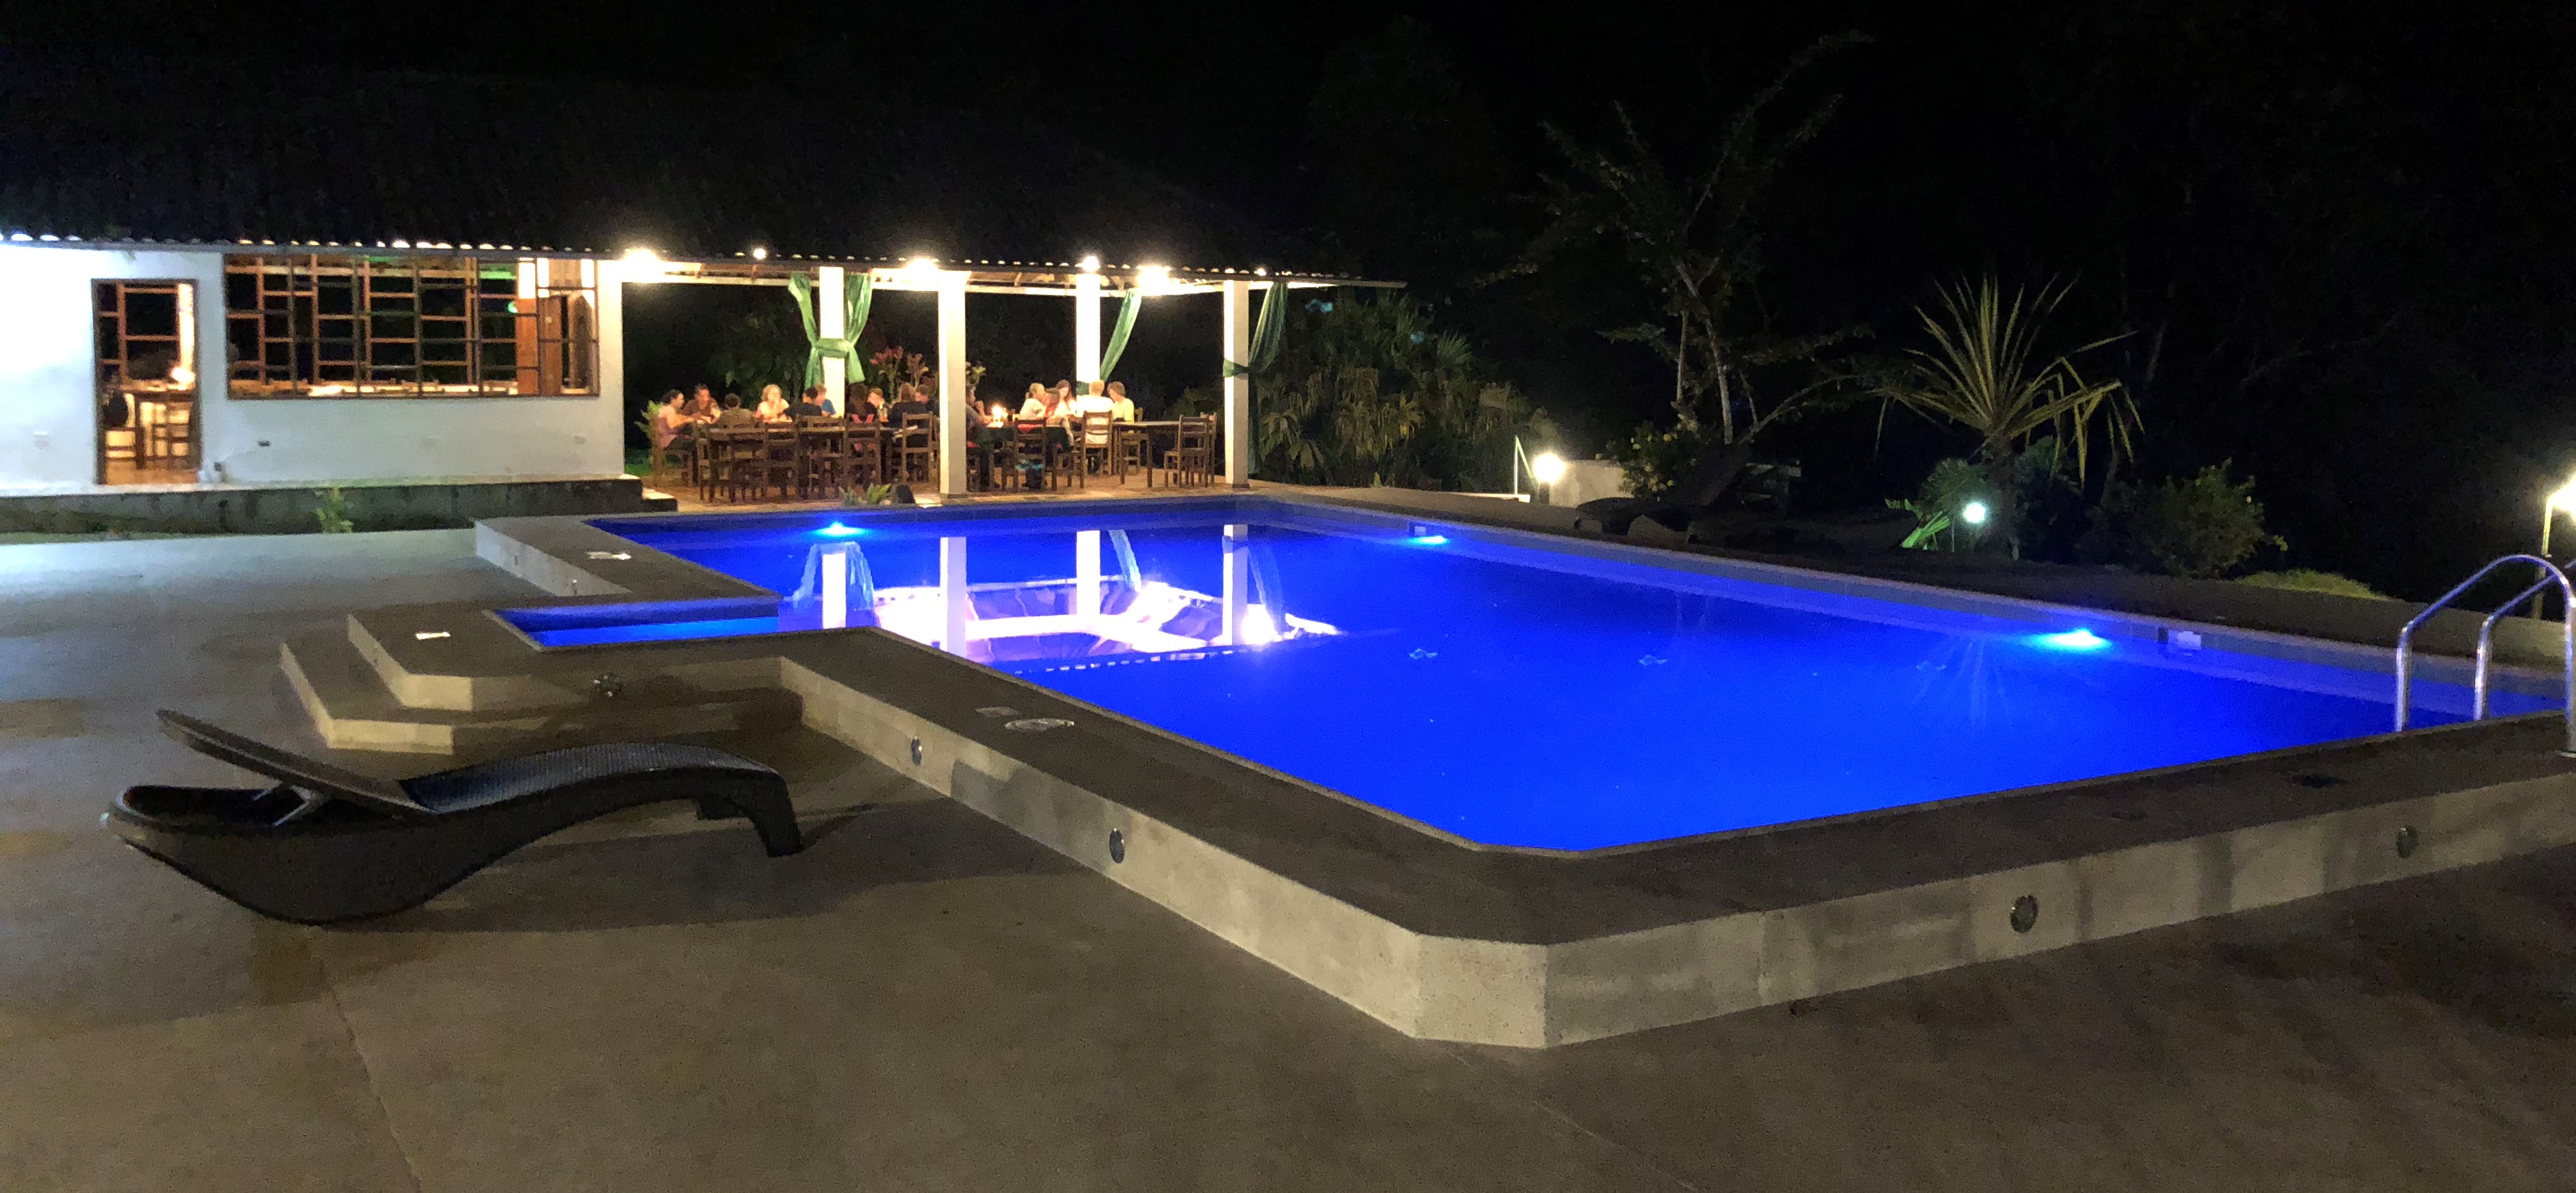 swimmingpool and restaurant by night